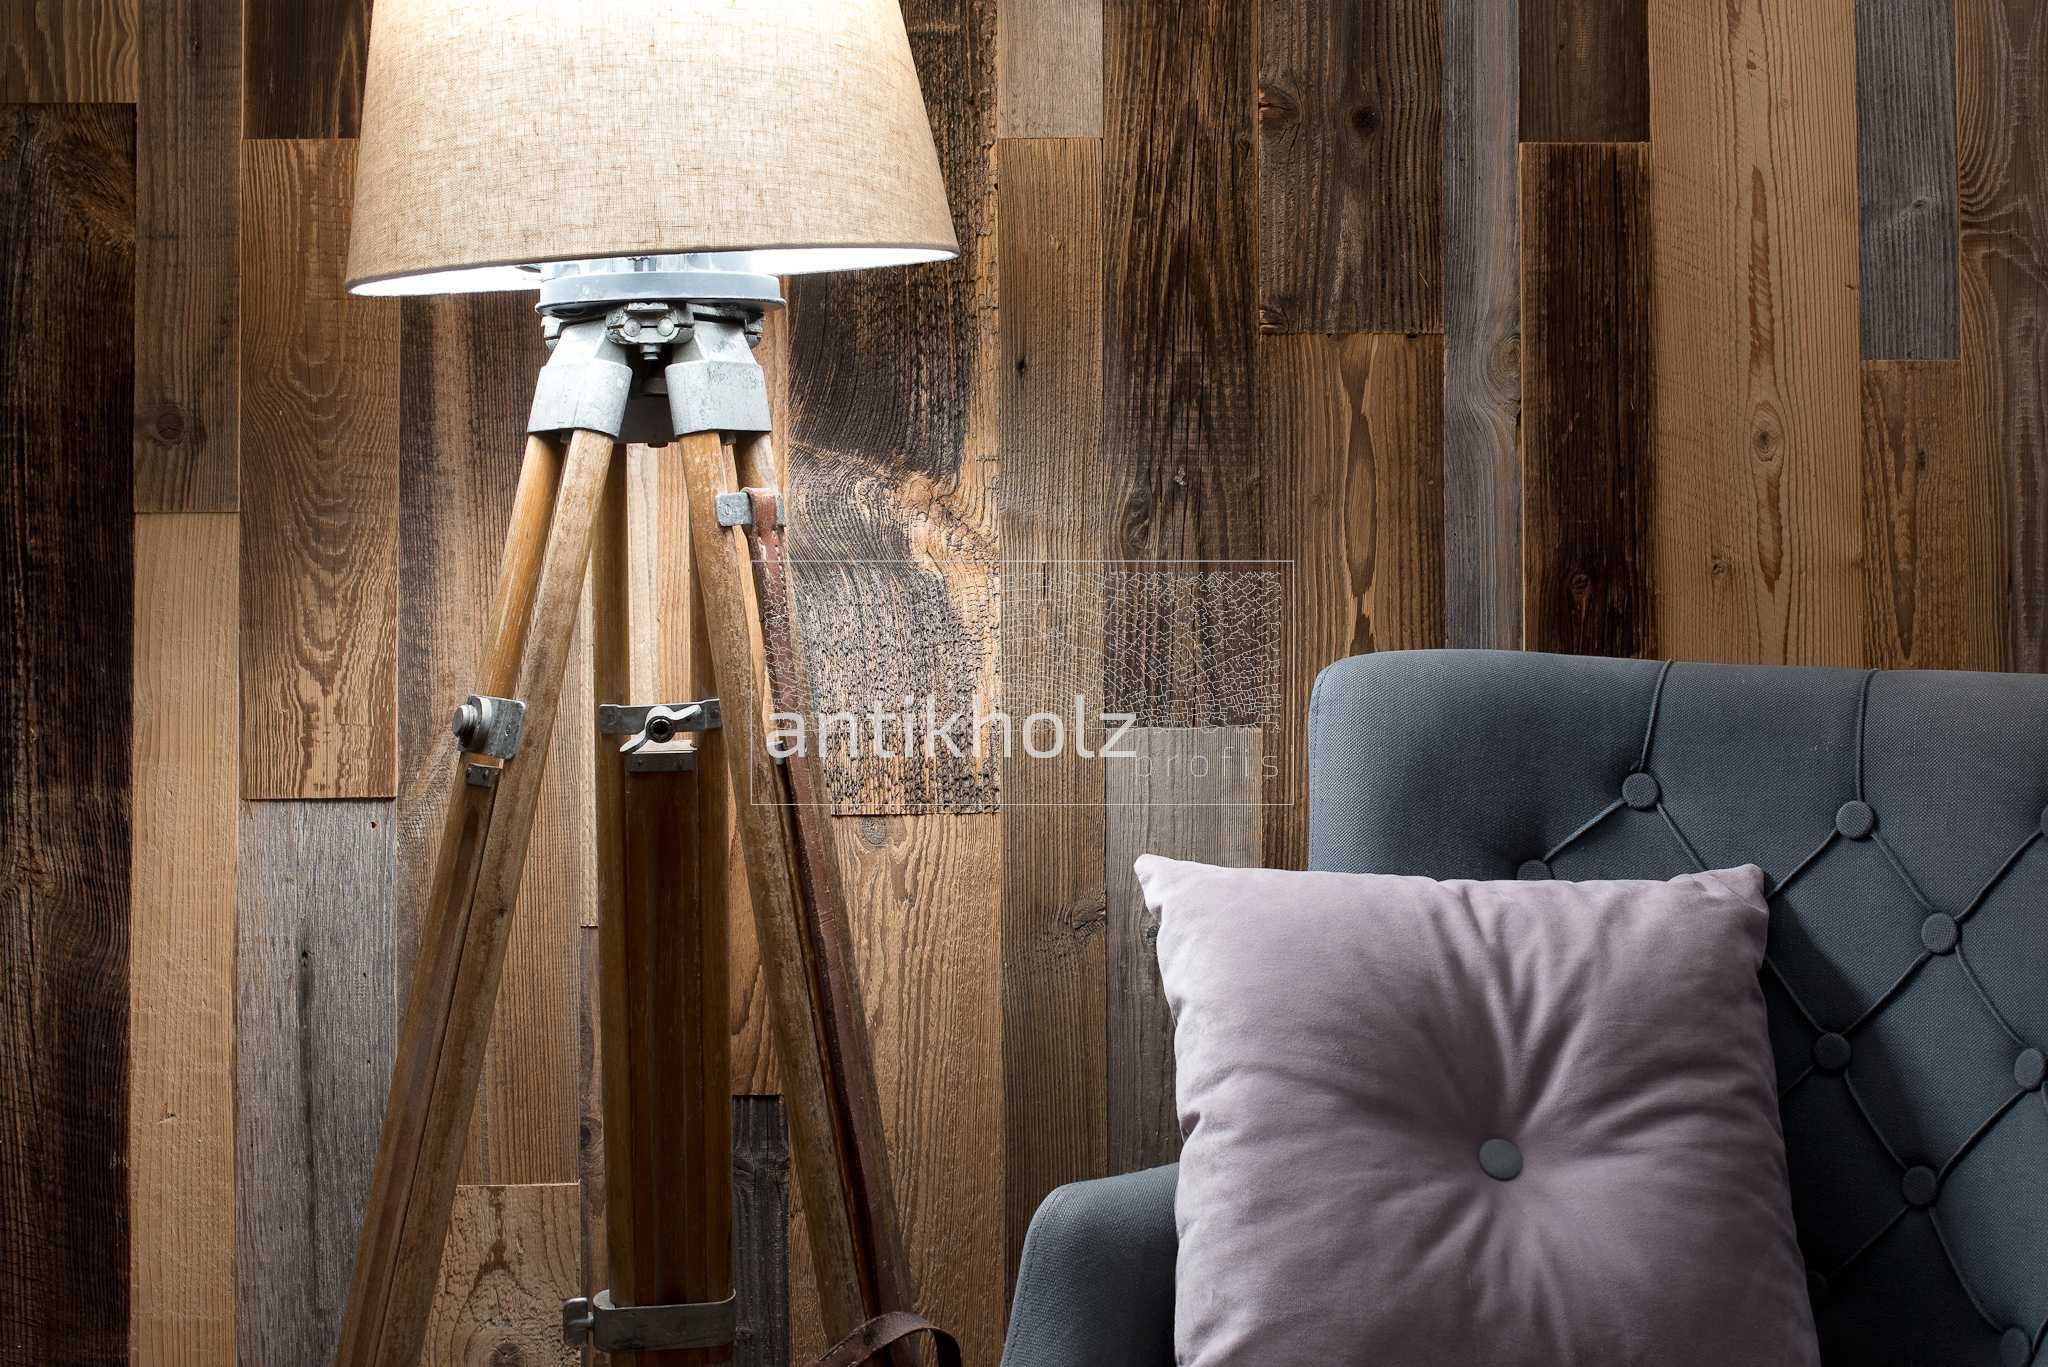 Drewniane panele ścienne 3d ze starego drewna, stare deski 120 cm